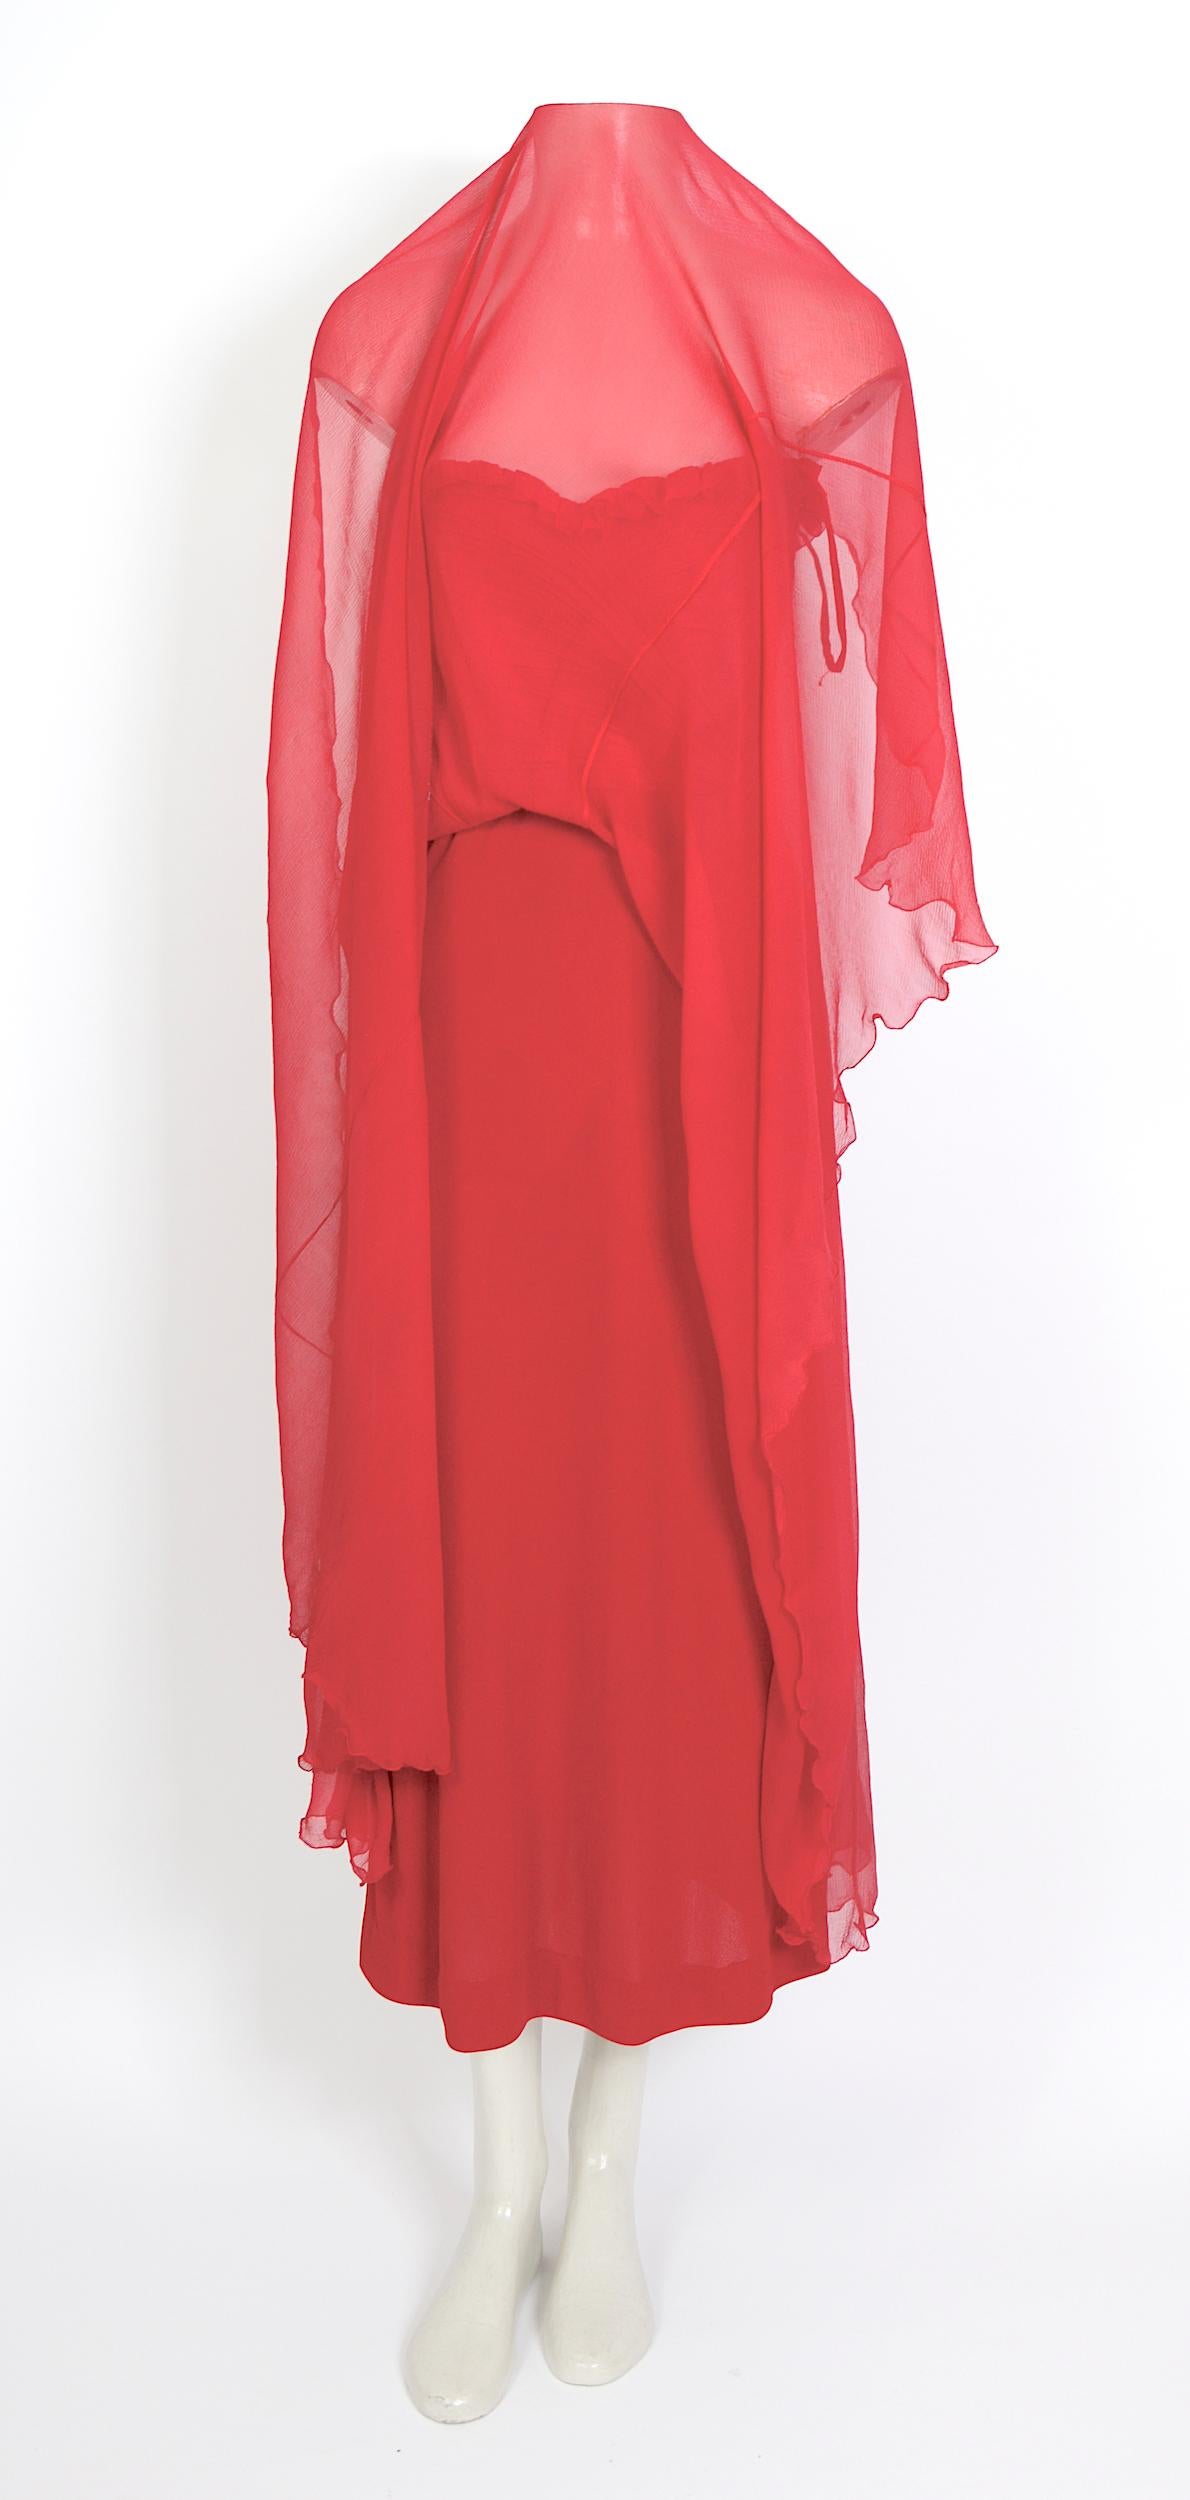 Loris Azzaro 1970s vintage collectors red silk chiffon draped bodice dress For Sale 1